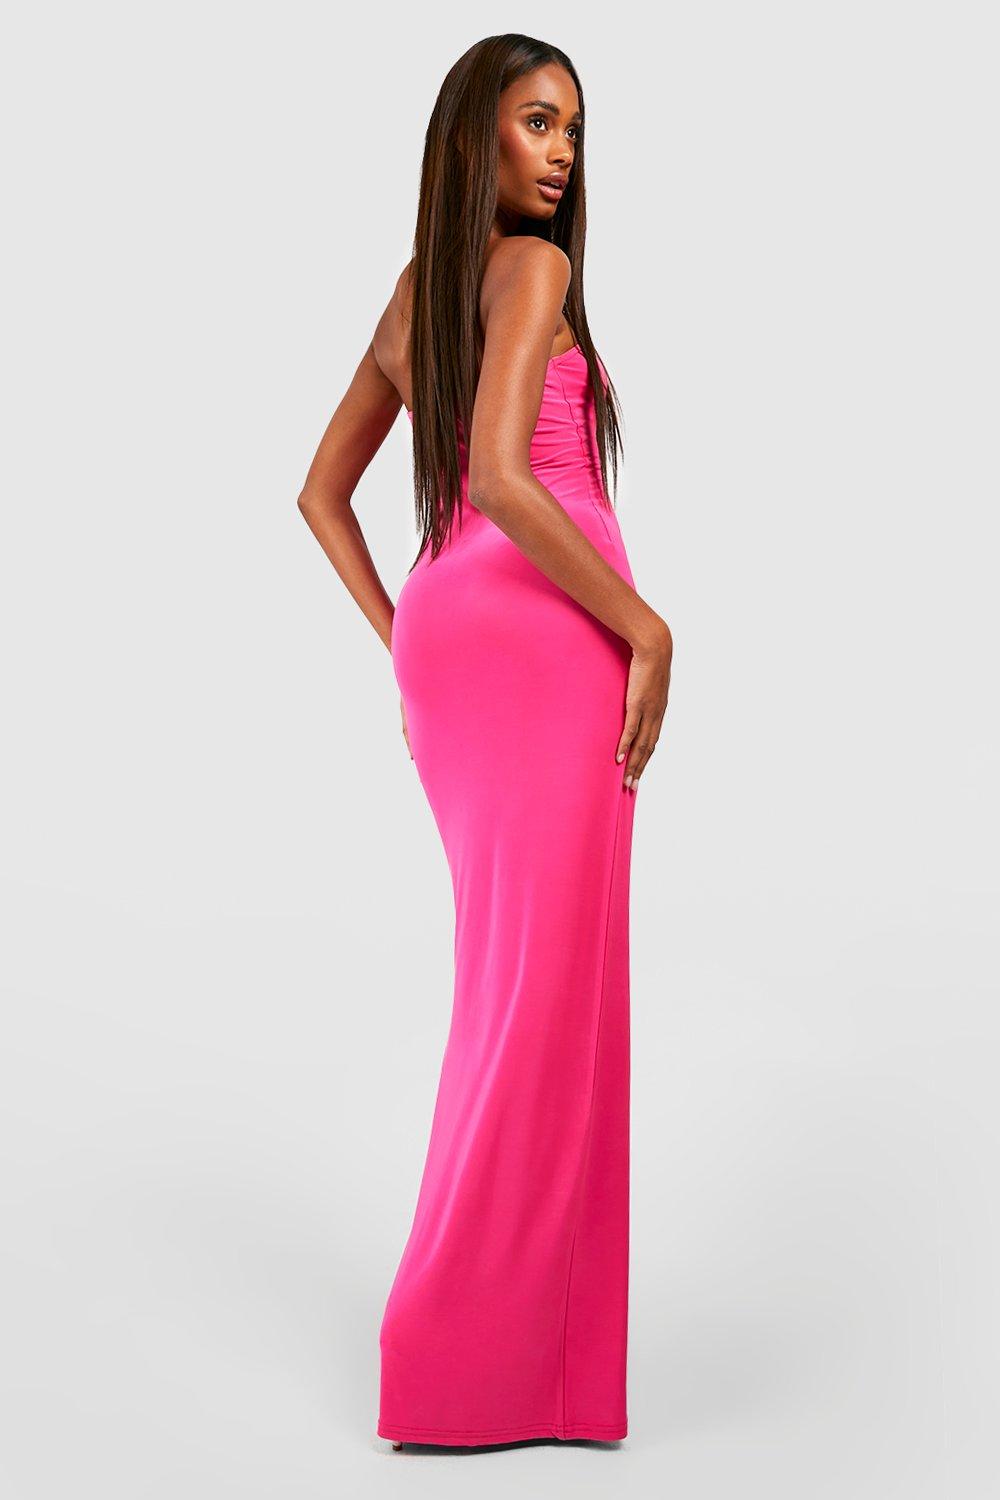 PATLOLLAV Plus Size Maxi Dress for Women Sexy Buttons Side Slit